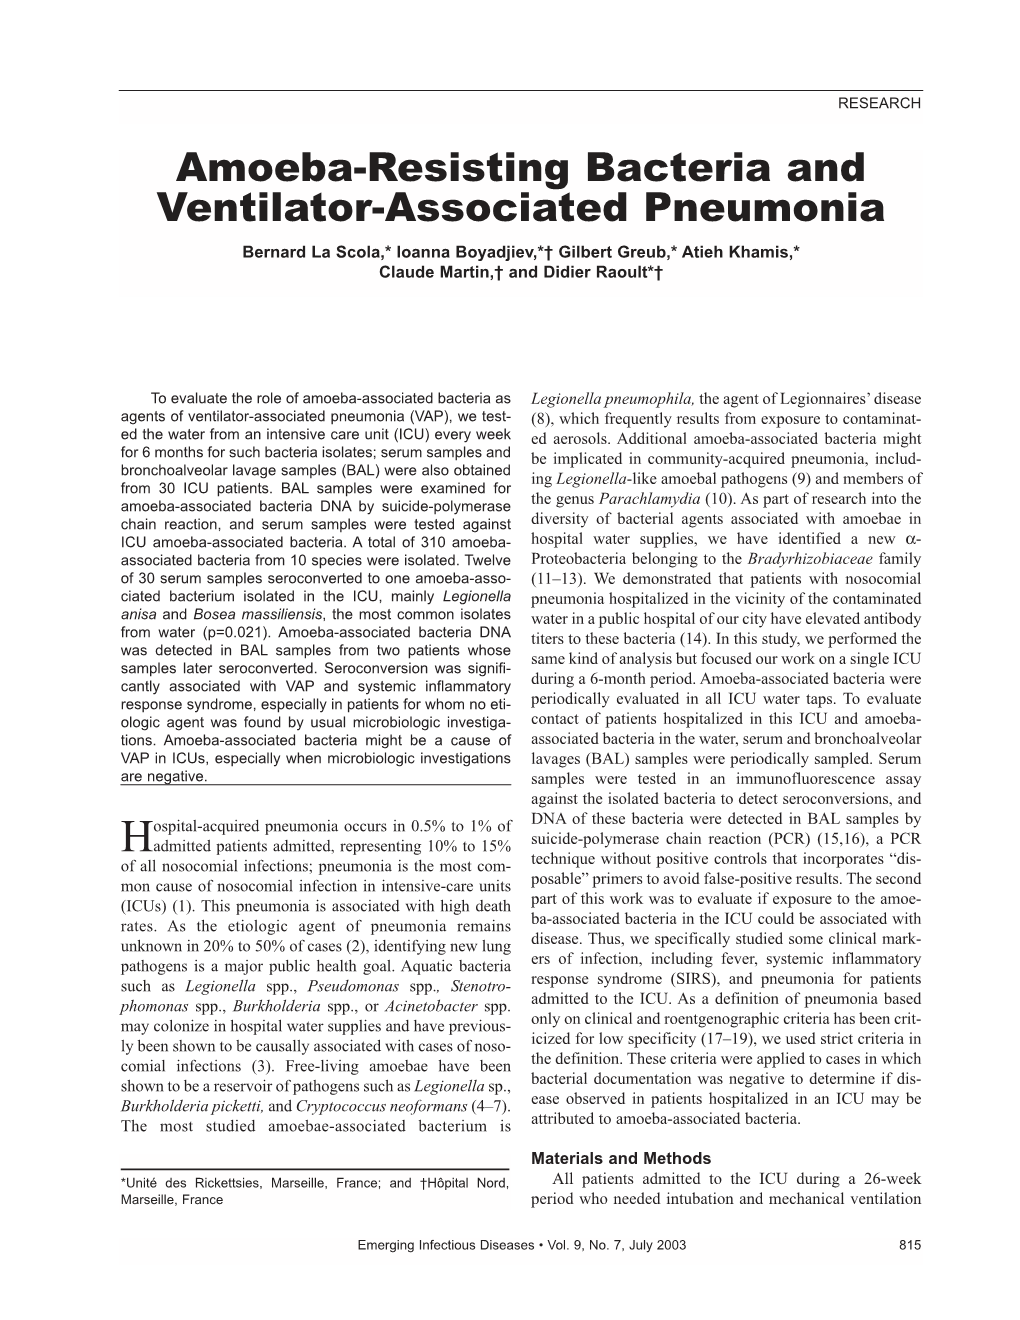 Amoeba-Resisting Bacteria and Ventilator-Associated Pneumonia